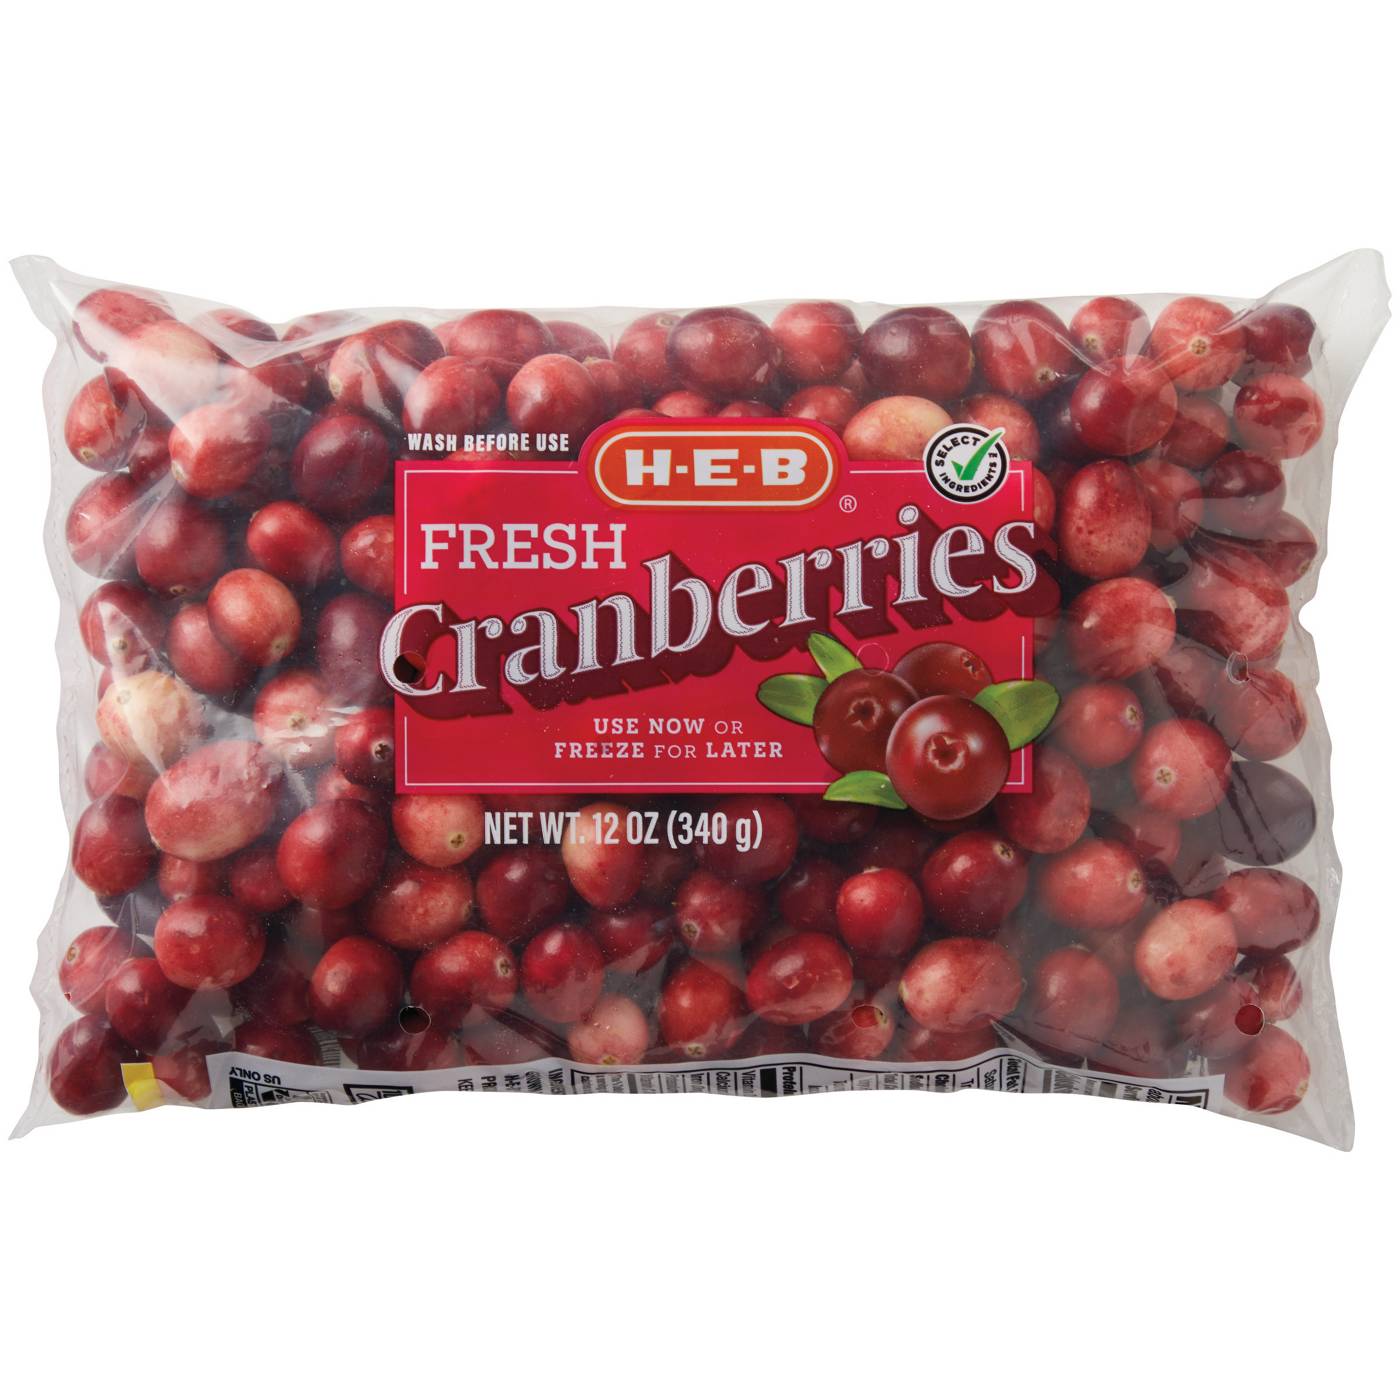 H-E-B Fresh Cranberries; image 1 of 3